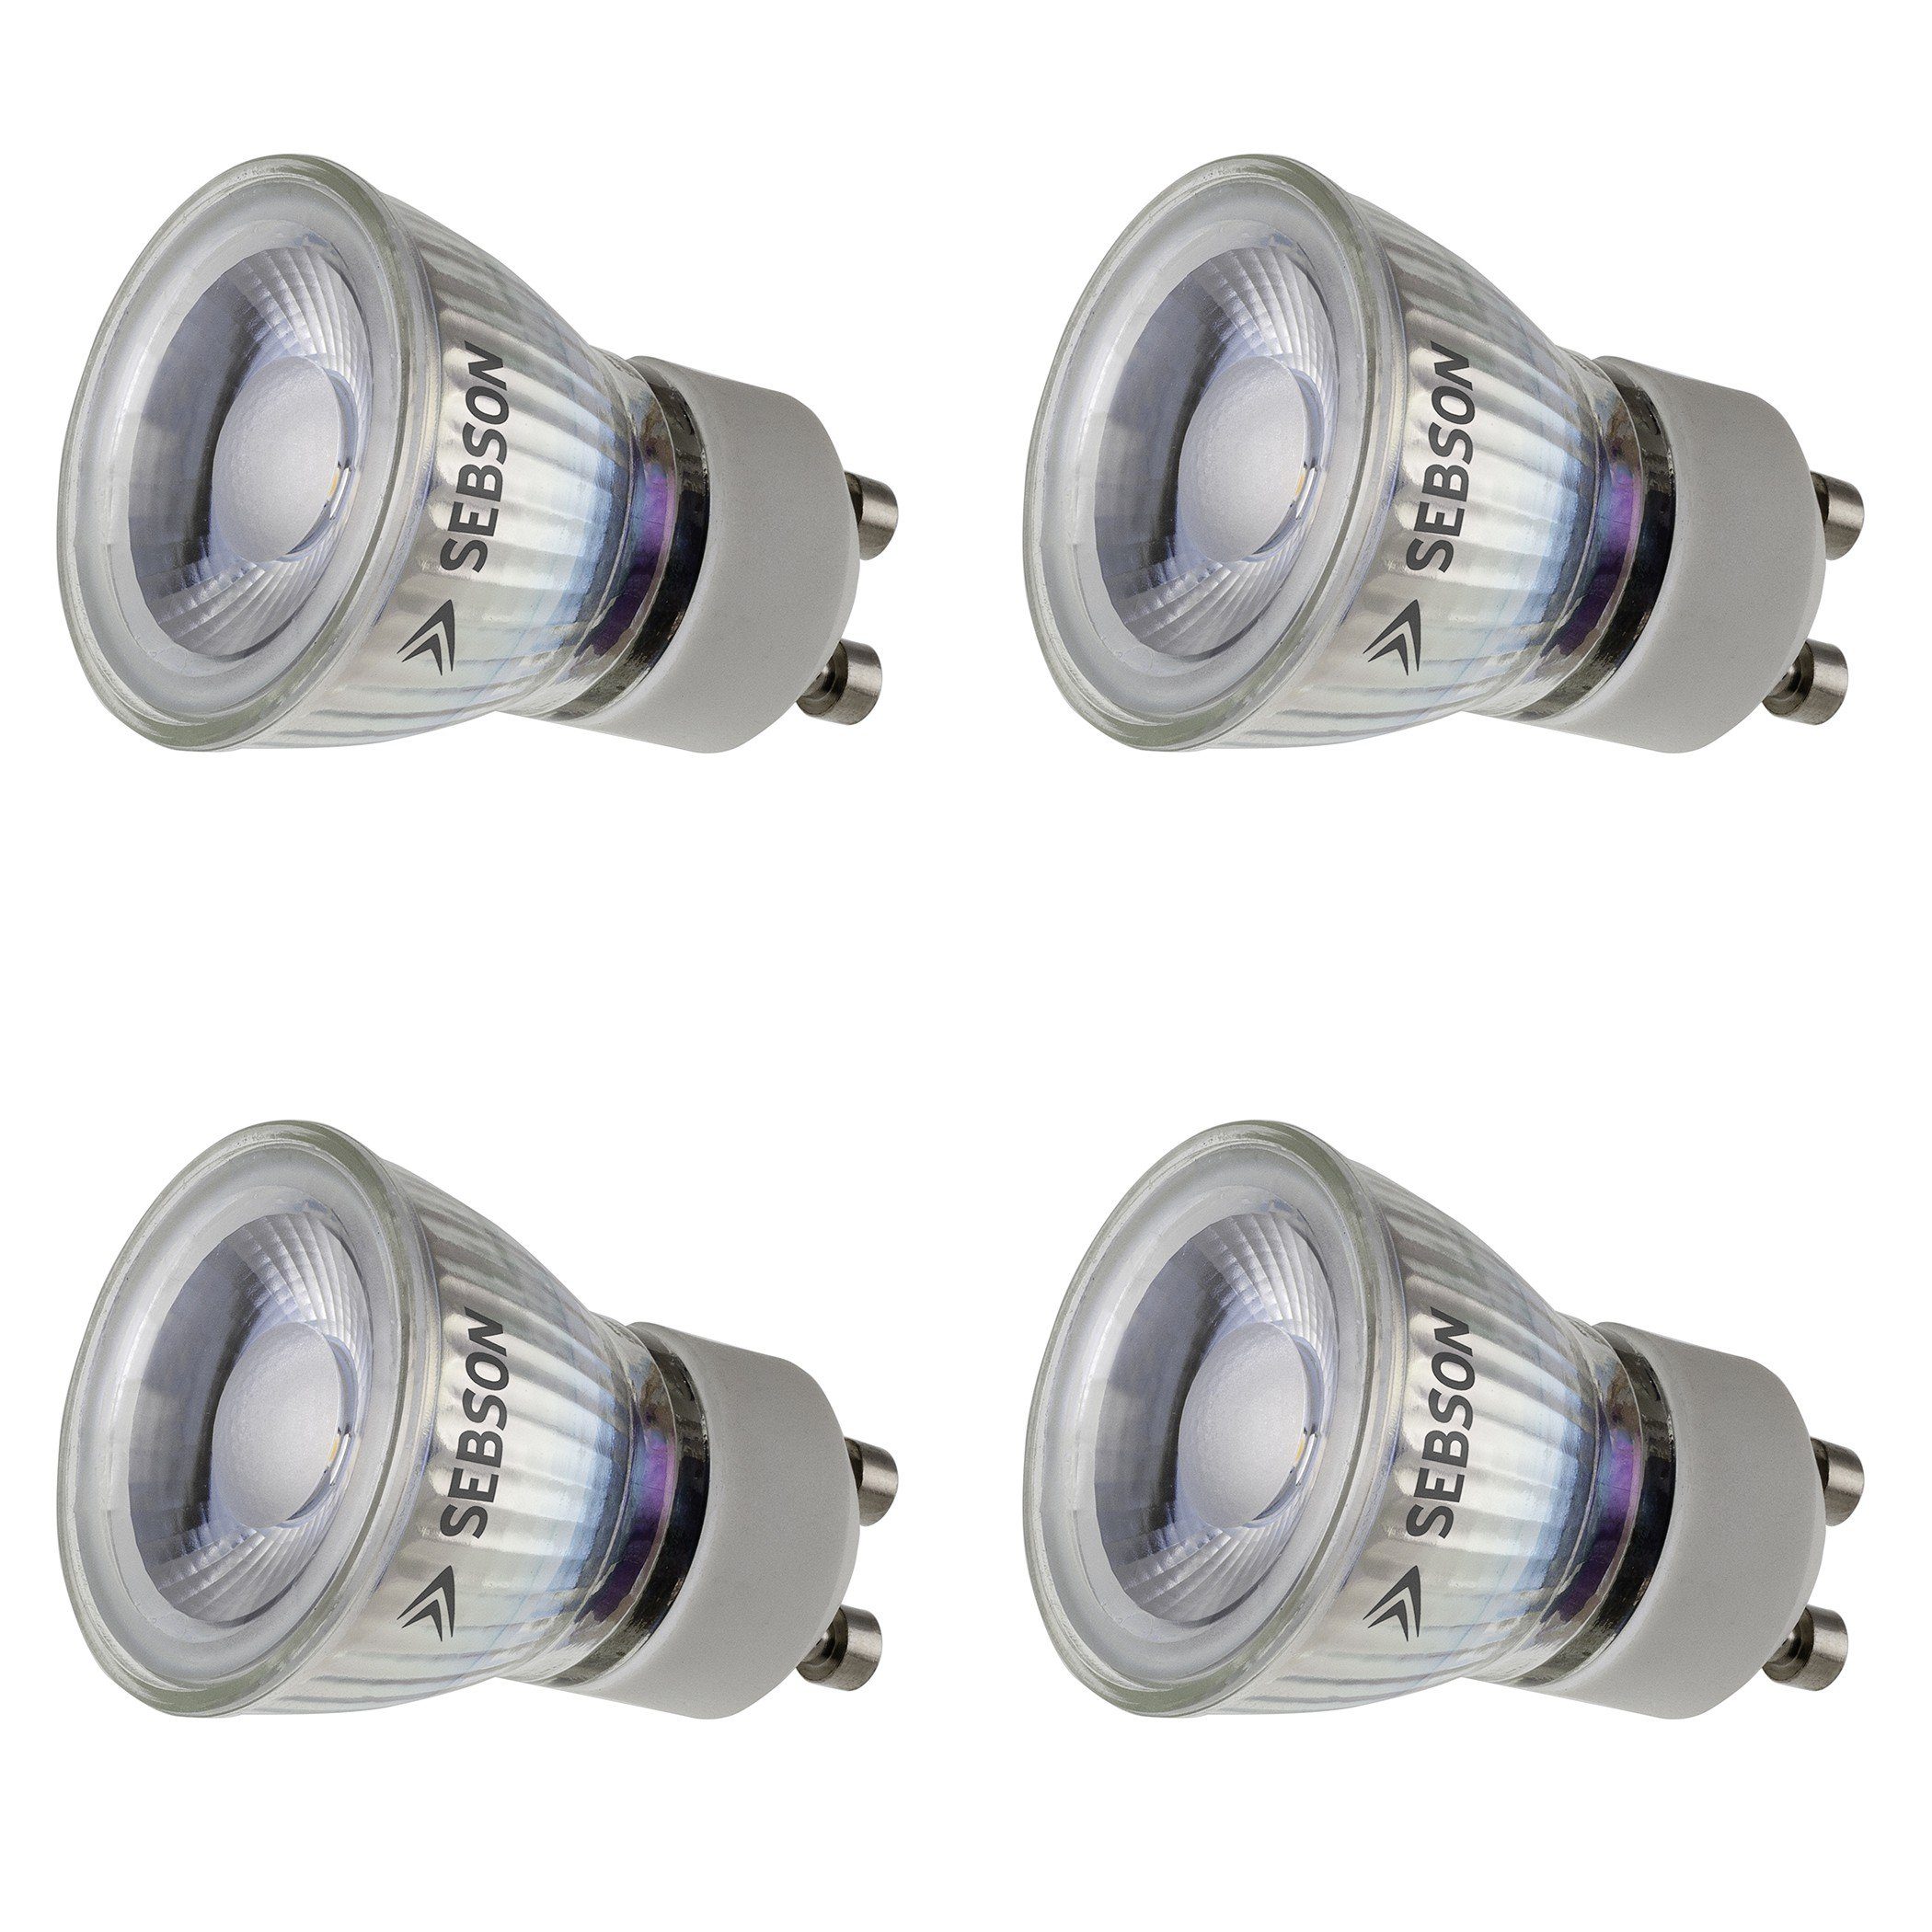 SEBSON »LED Lampe GU10 warmweiß 3W 35mm Durchmesser, 250lm, Spot 46°, 230V,  4er Pack« LED-Leuchtmittel